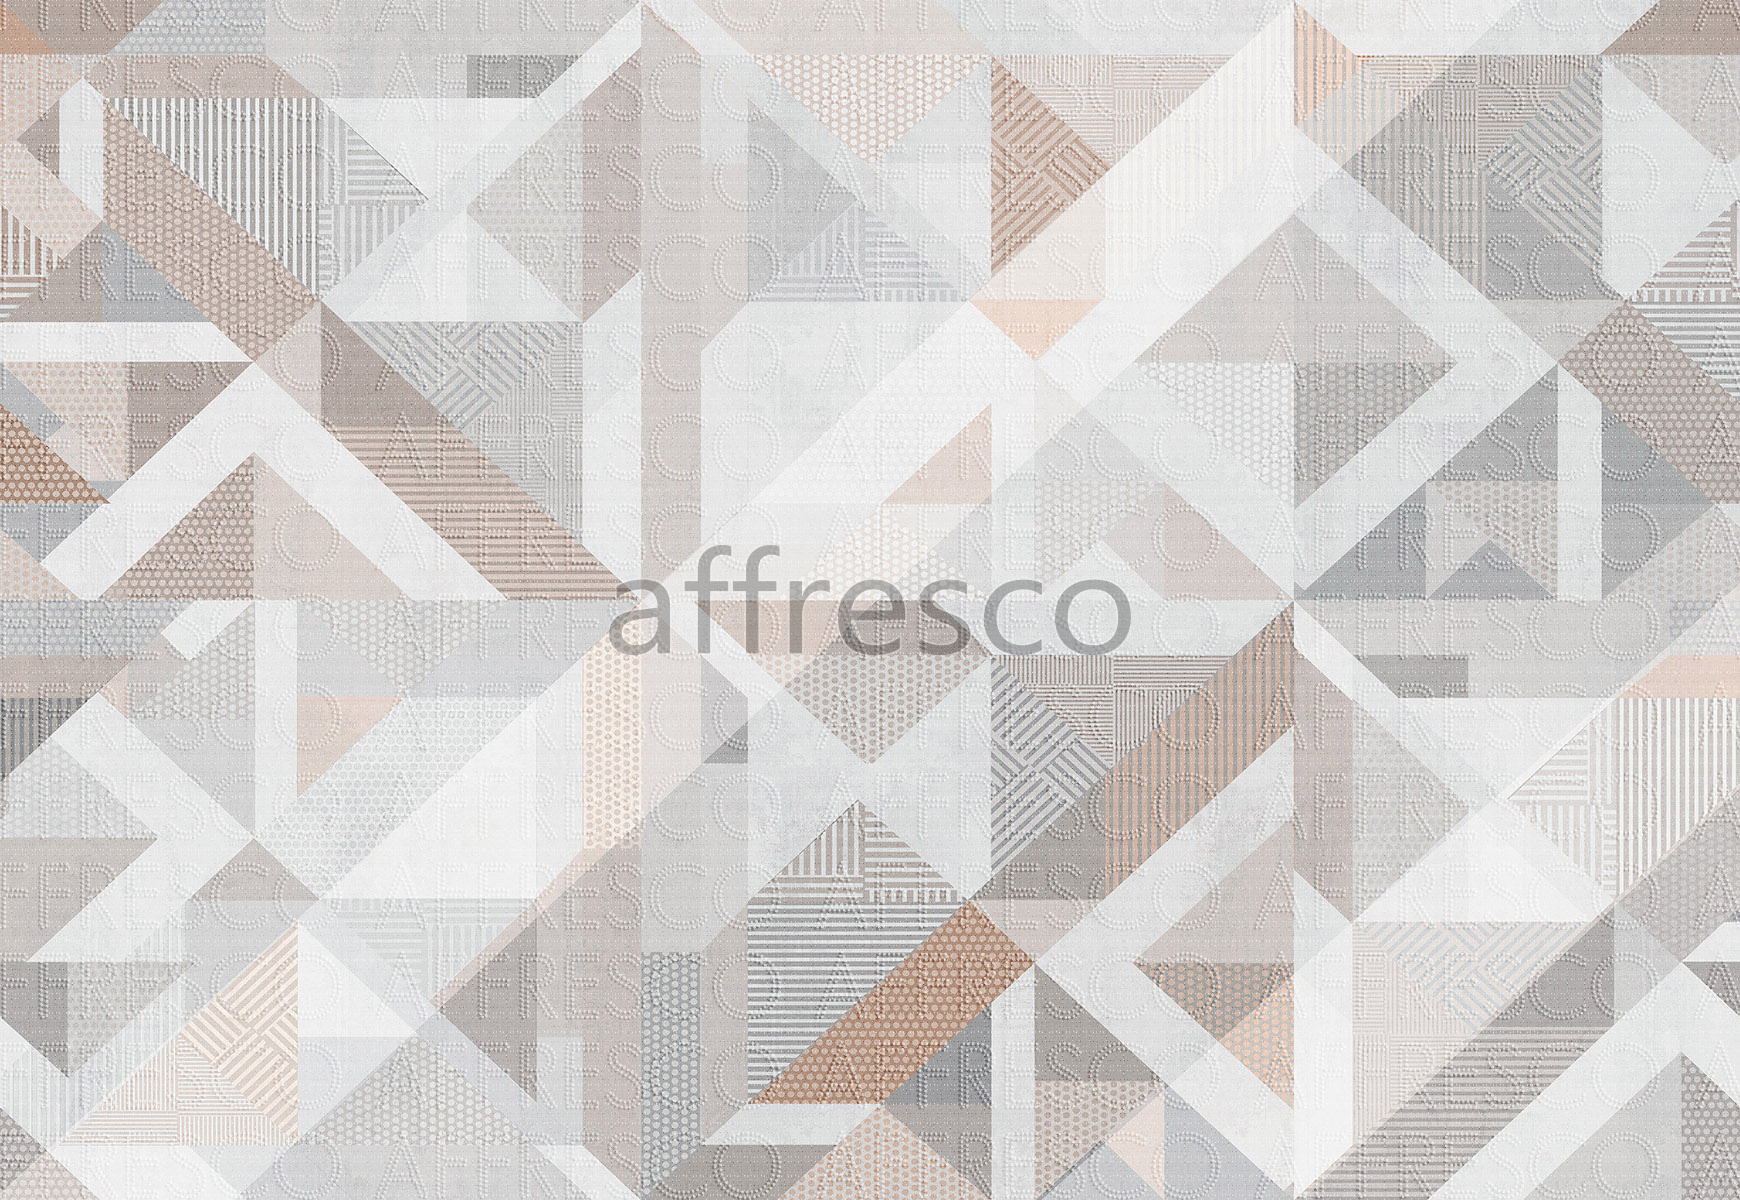 ID136378 | Geometry |  | Affresco Factory